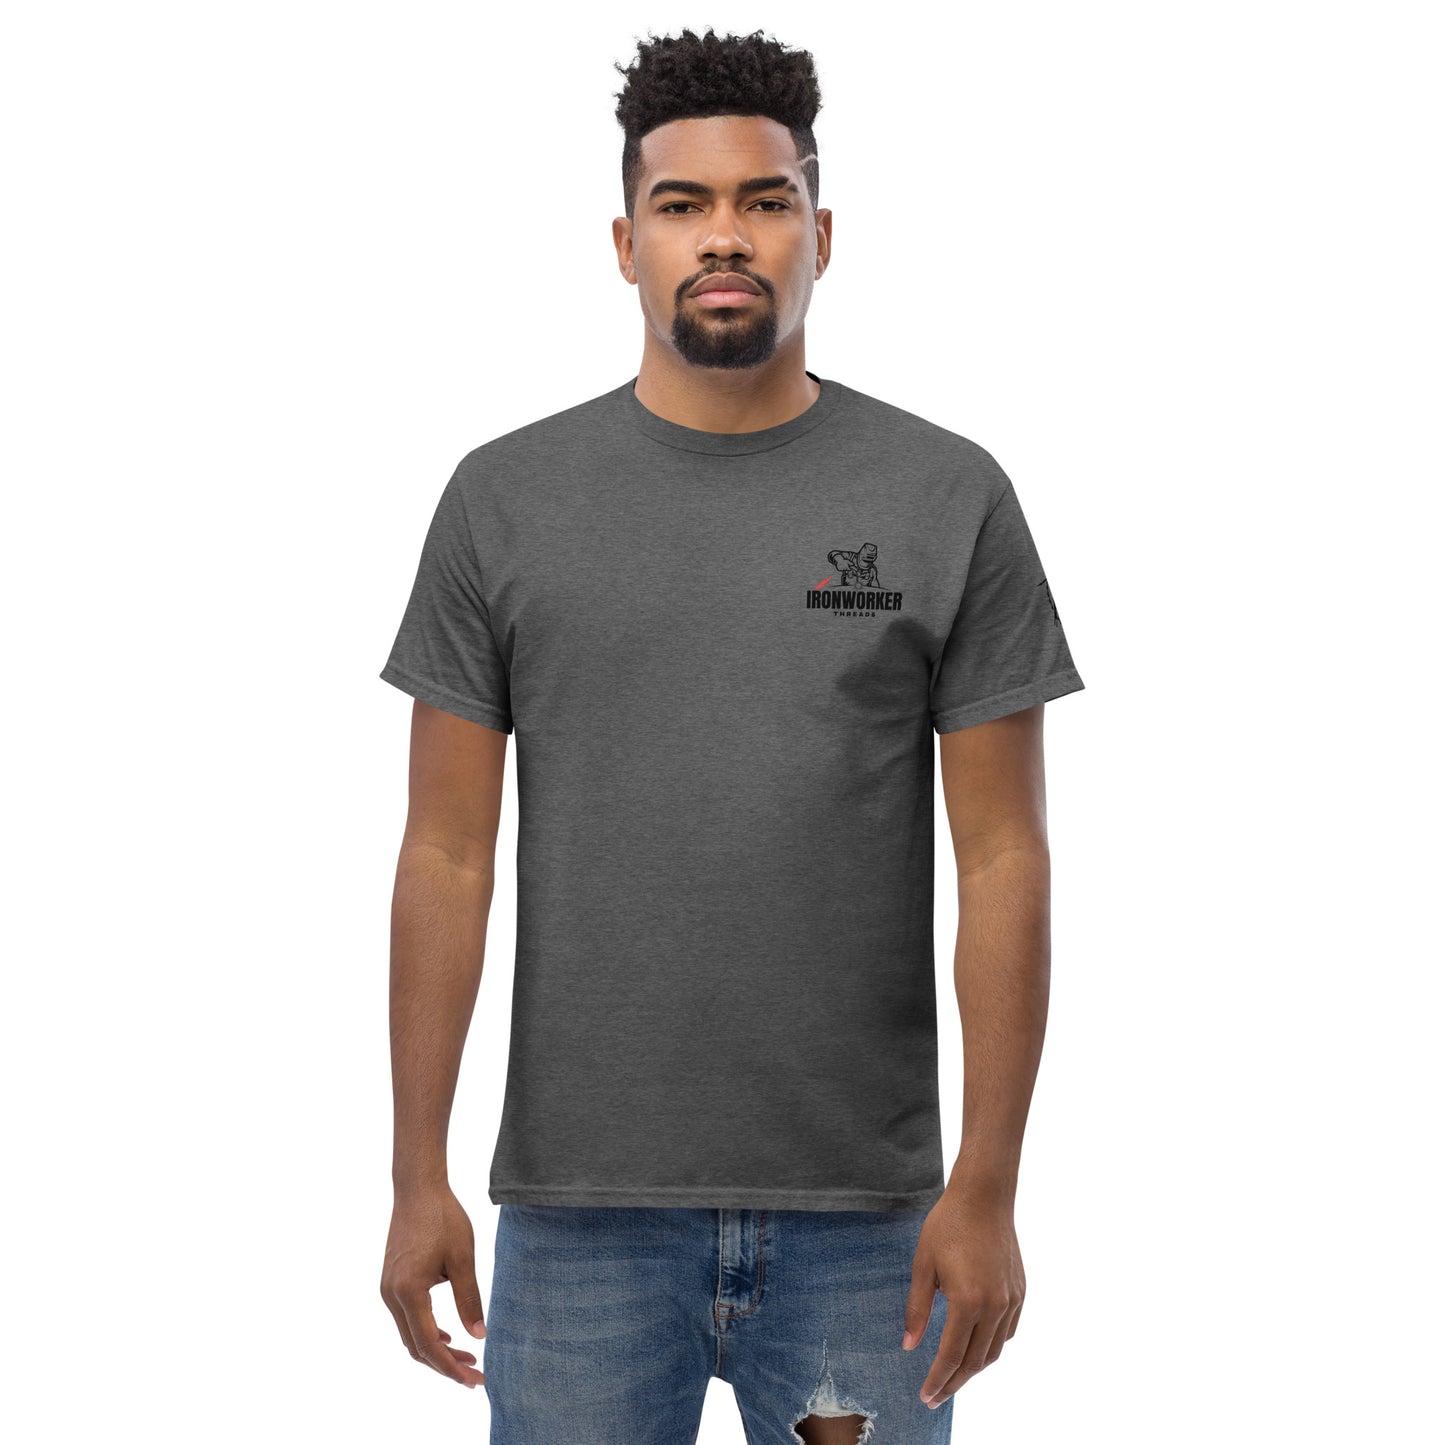 OG Ironworker Threads T-shirt